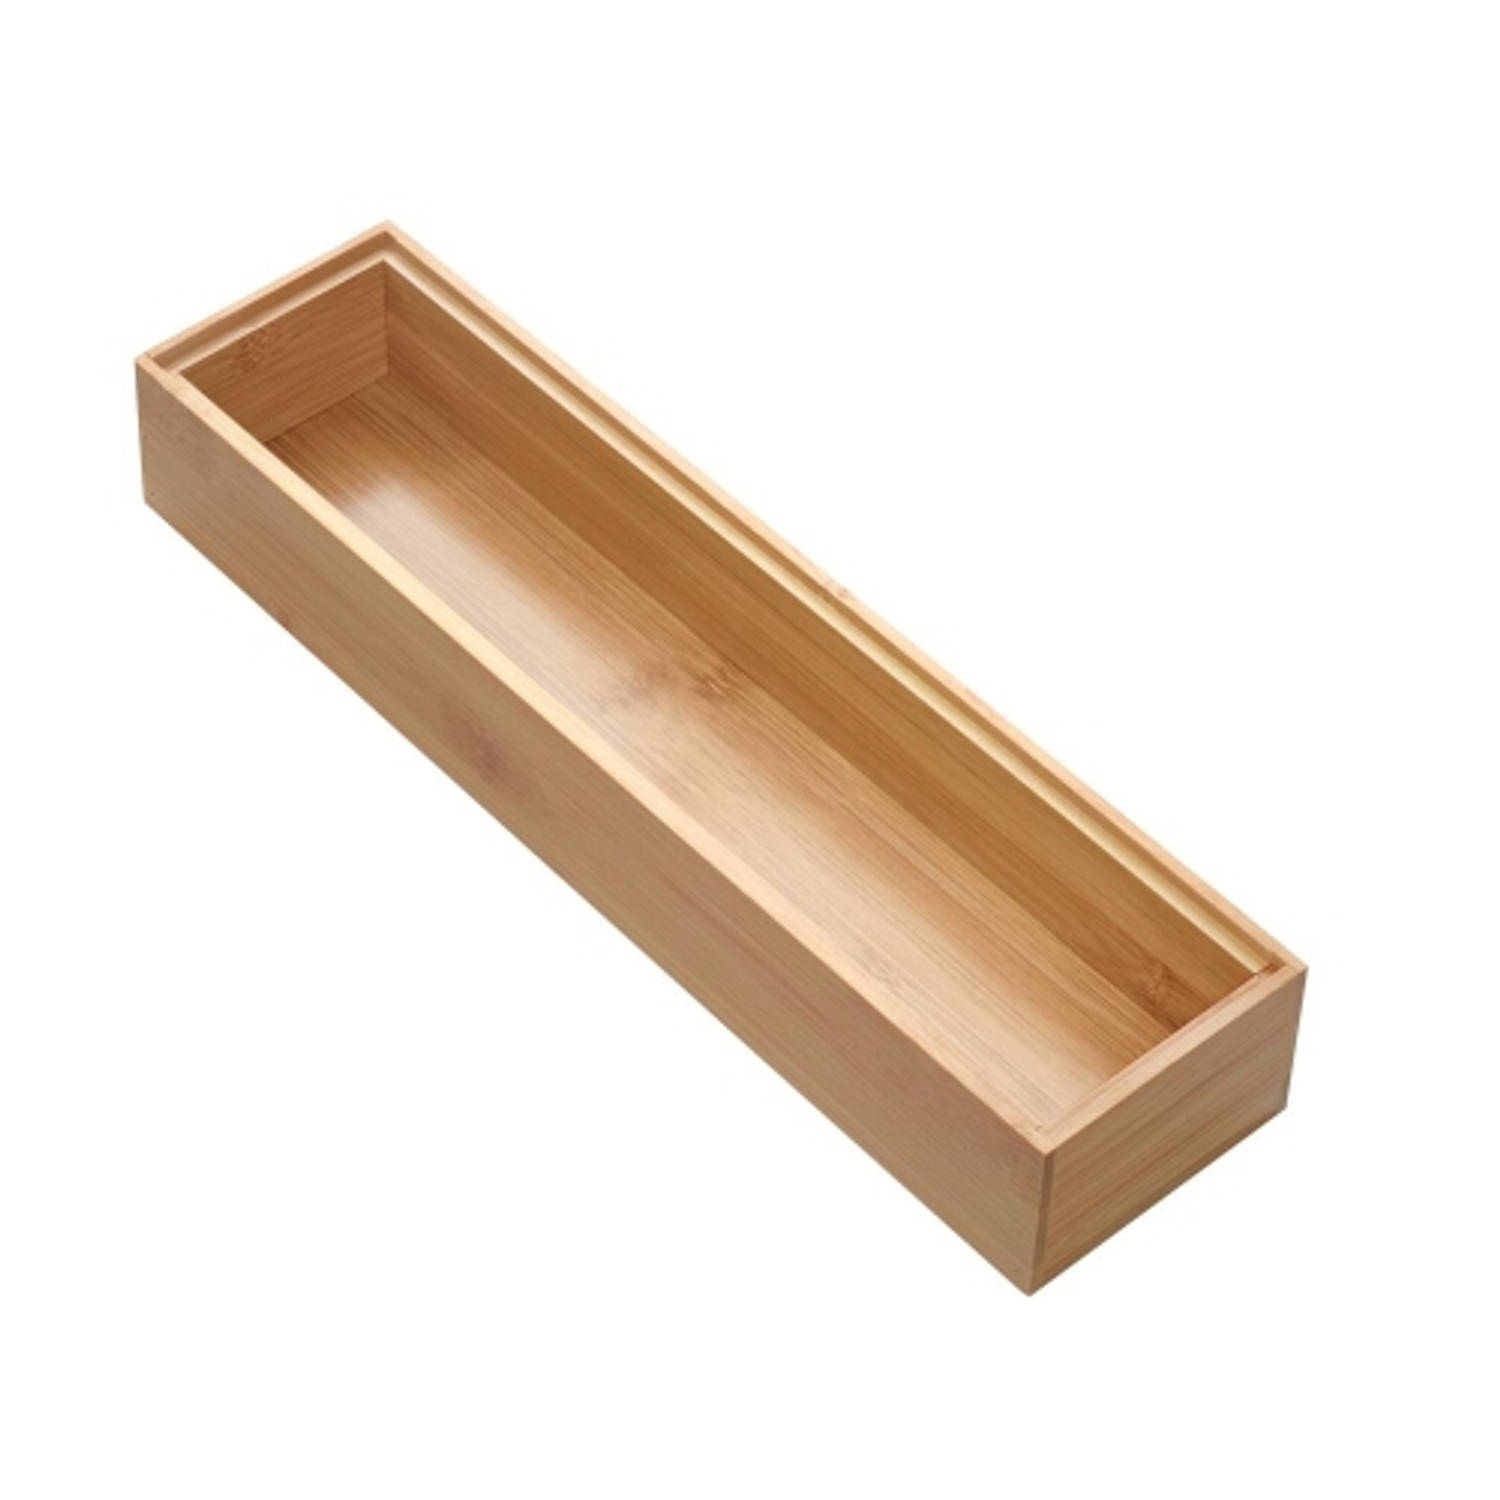 iDesign - Lade Organizer, Small, 7.5 x 30.5 x 5 cm, Bamboe, Beige - iDesign Formbu